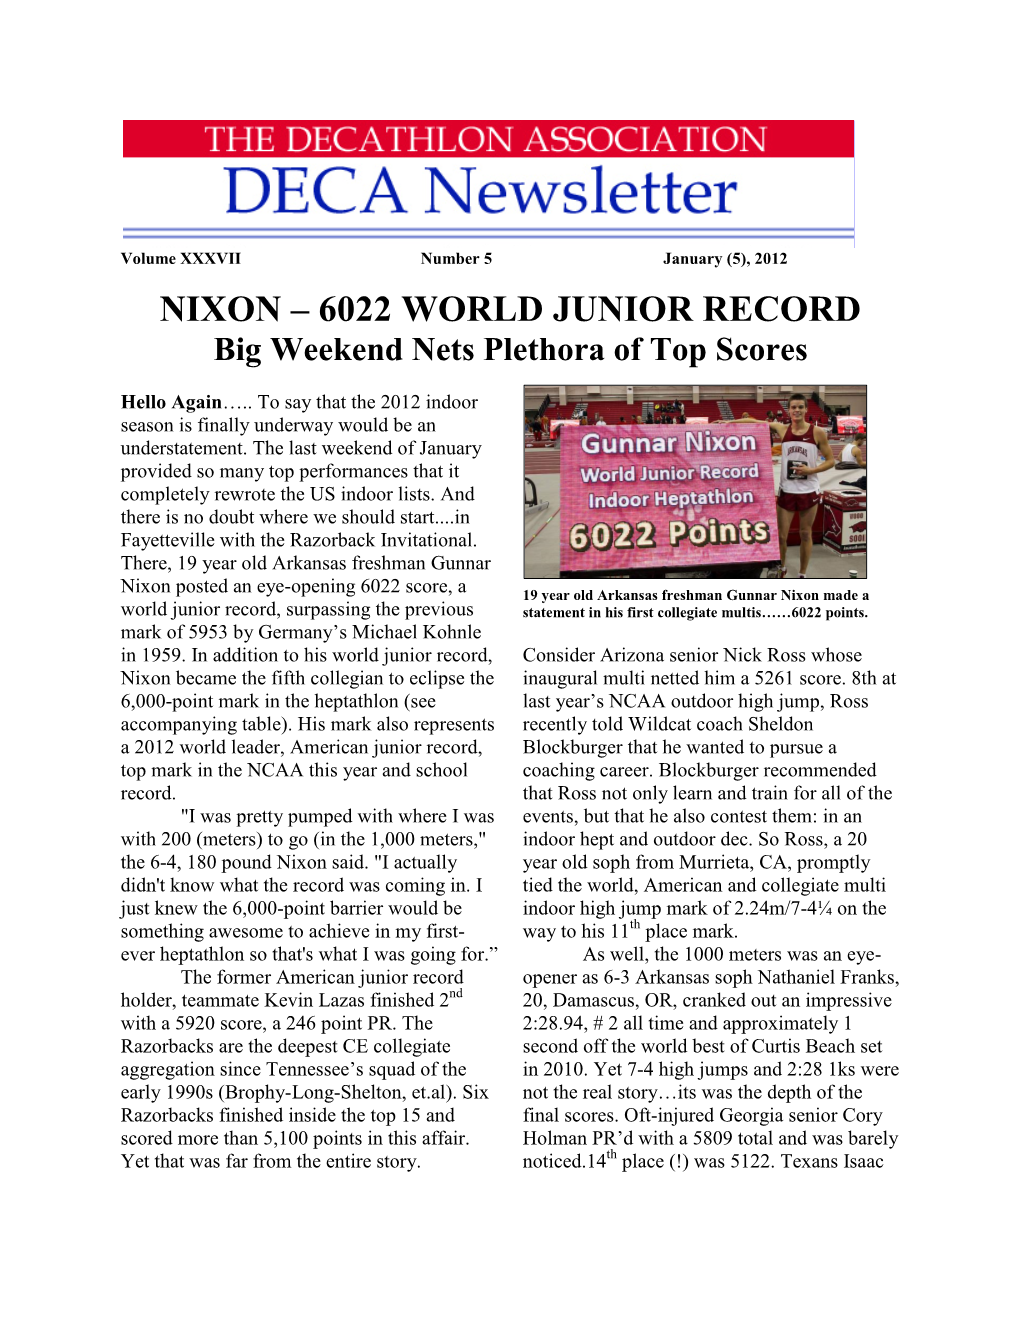 NIXON – 6022 WORLD JUNIOR RECORD Big Weekend Nets Plethora of Top Scores